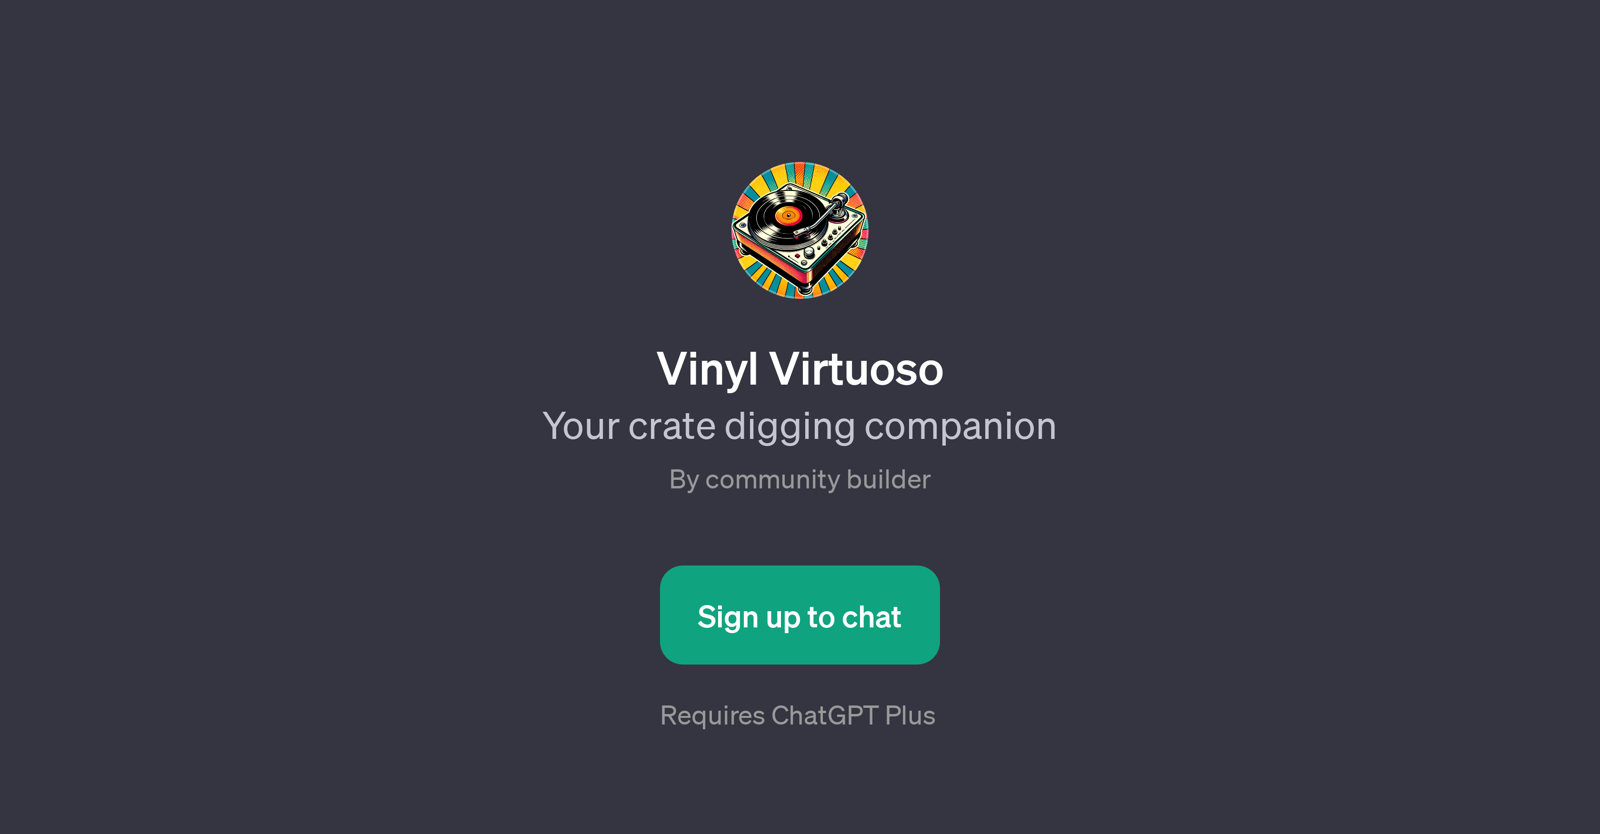 Vinyl Virtuoso website